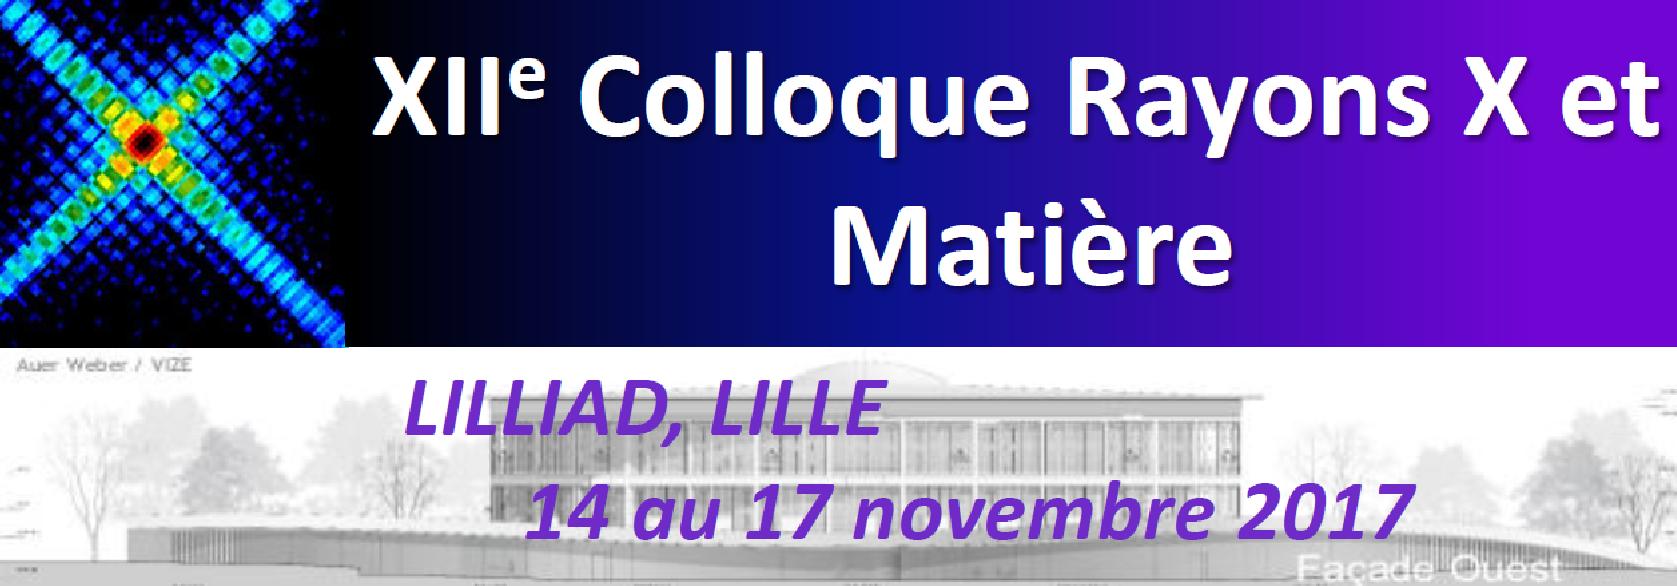 Colloque Rayons X et Matière à Lilliad, 14-17 novembre 2017